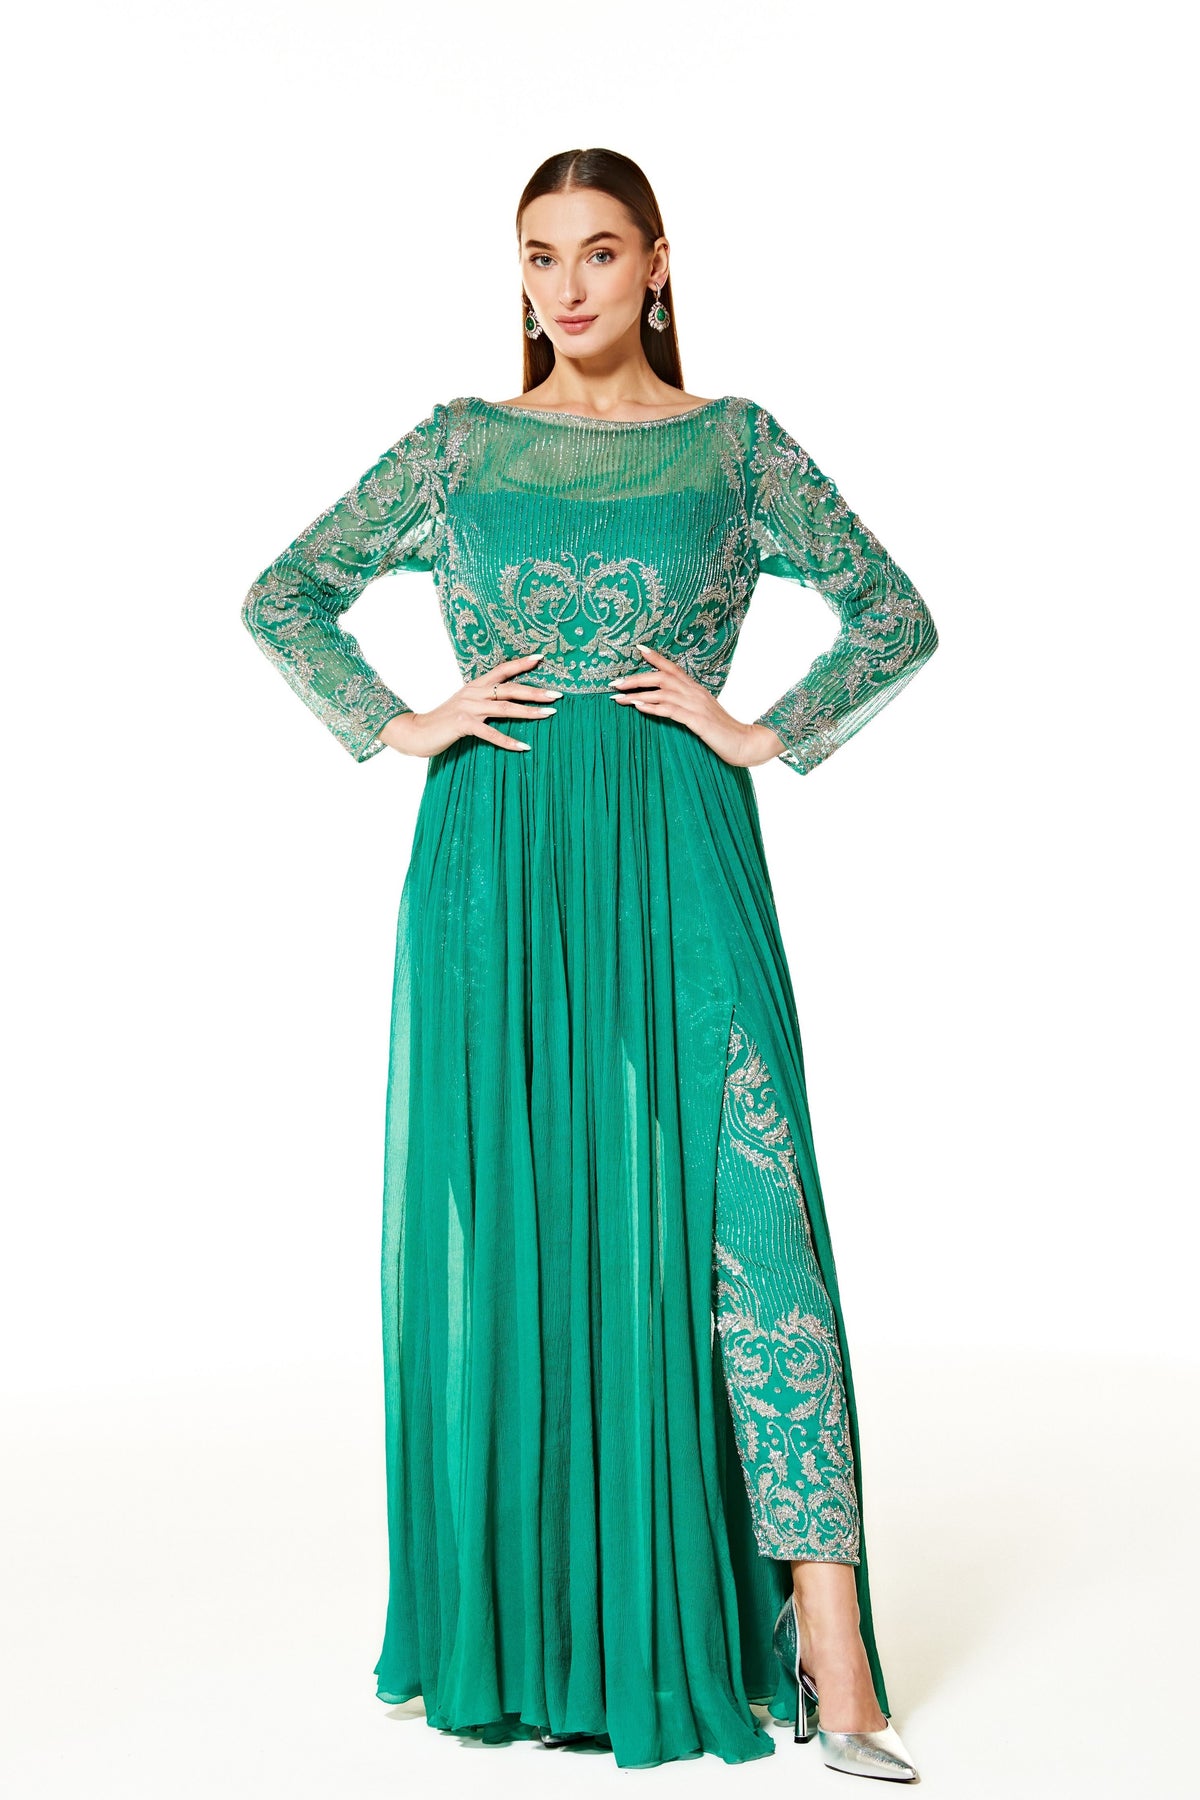 Adah Aqua Green Gown With Pant